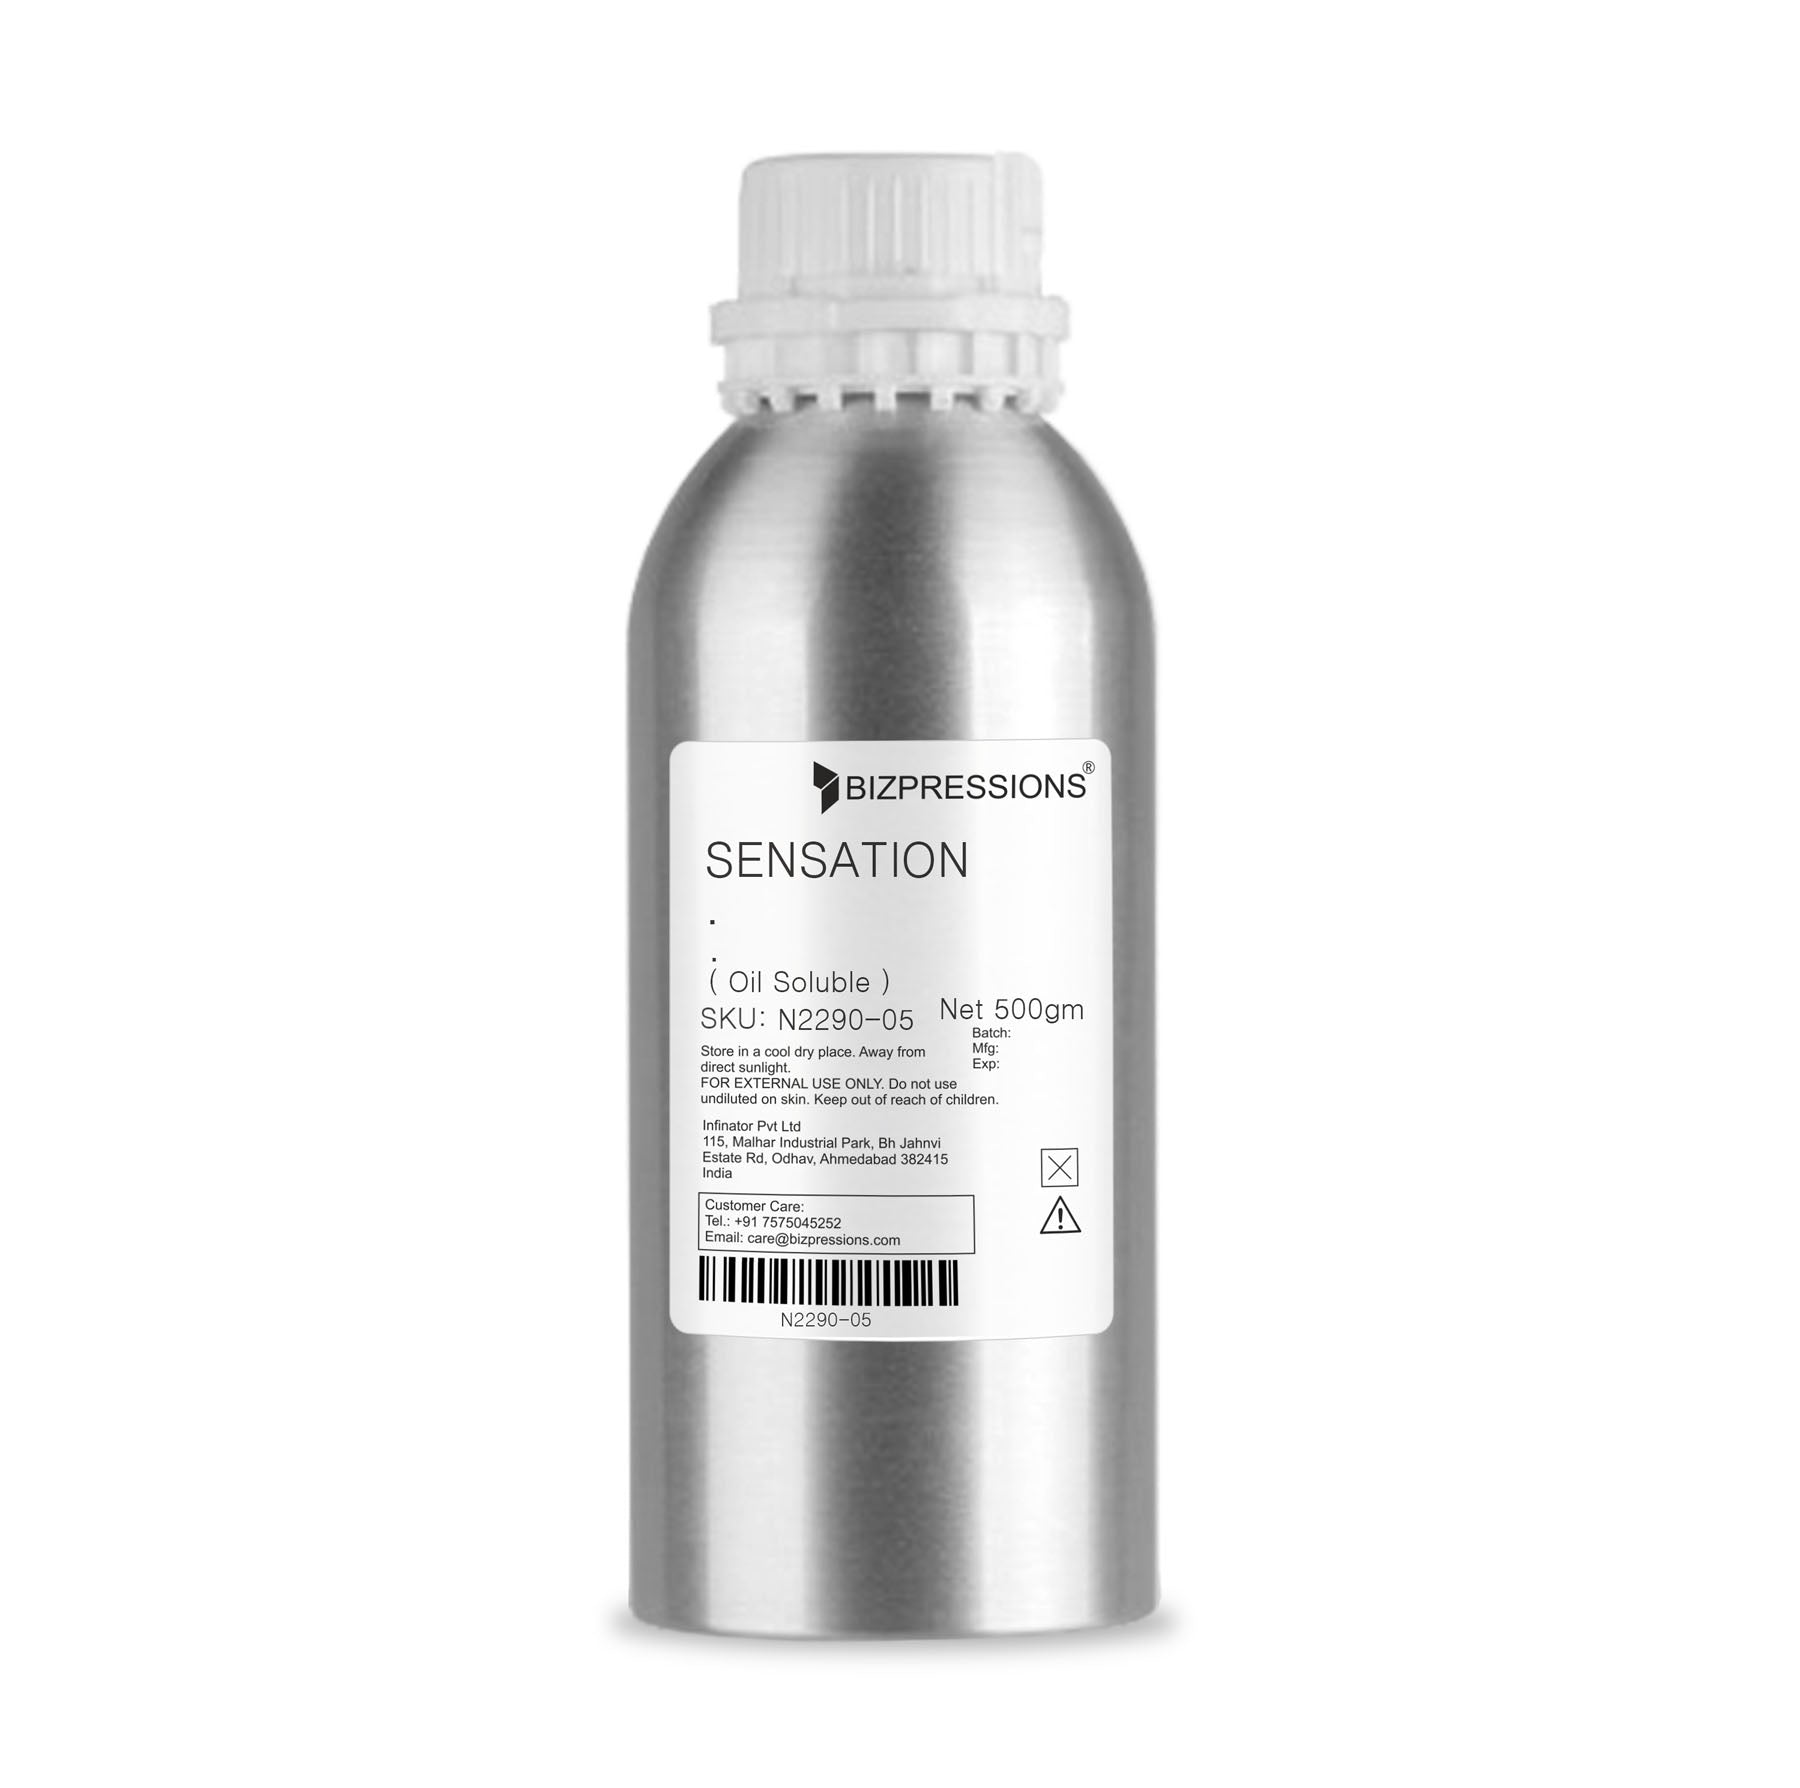 SENSATION - Fragrance ( Oil Soluble ) - 500 gm